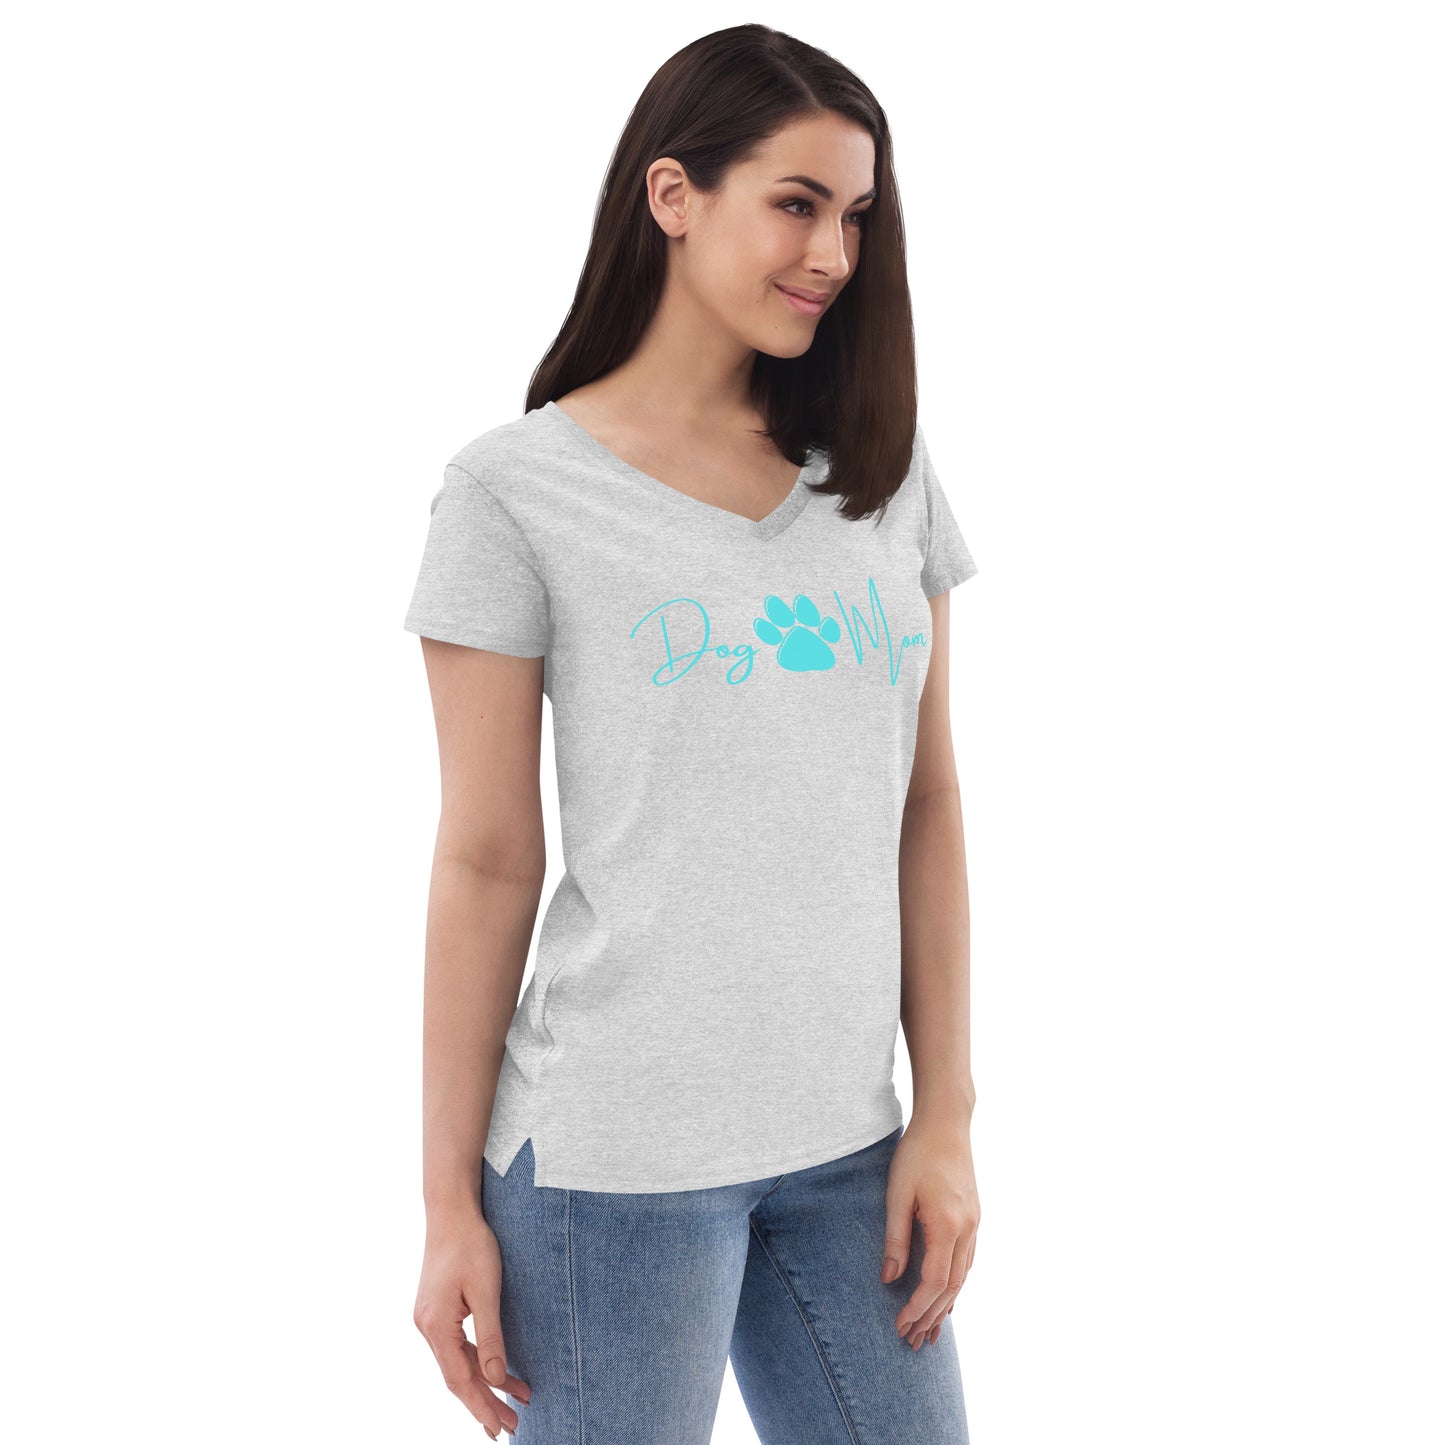 Jessi Blue Dog Mom Women’s recycled v-neck t-shirt